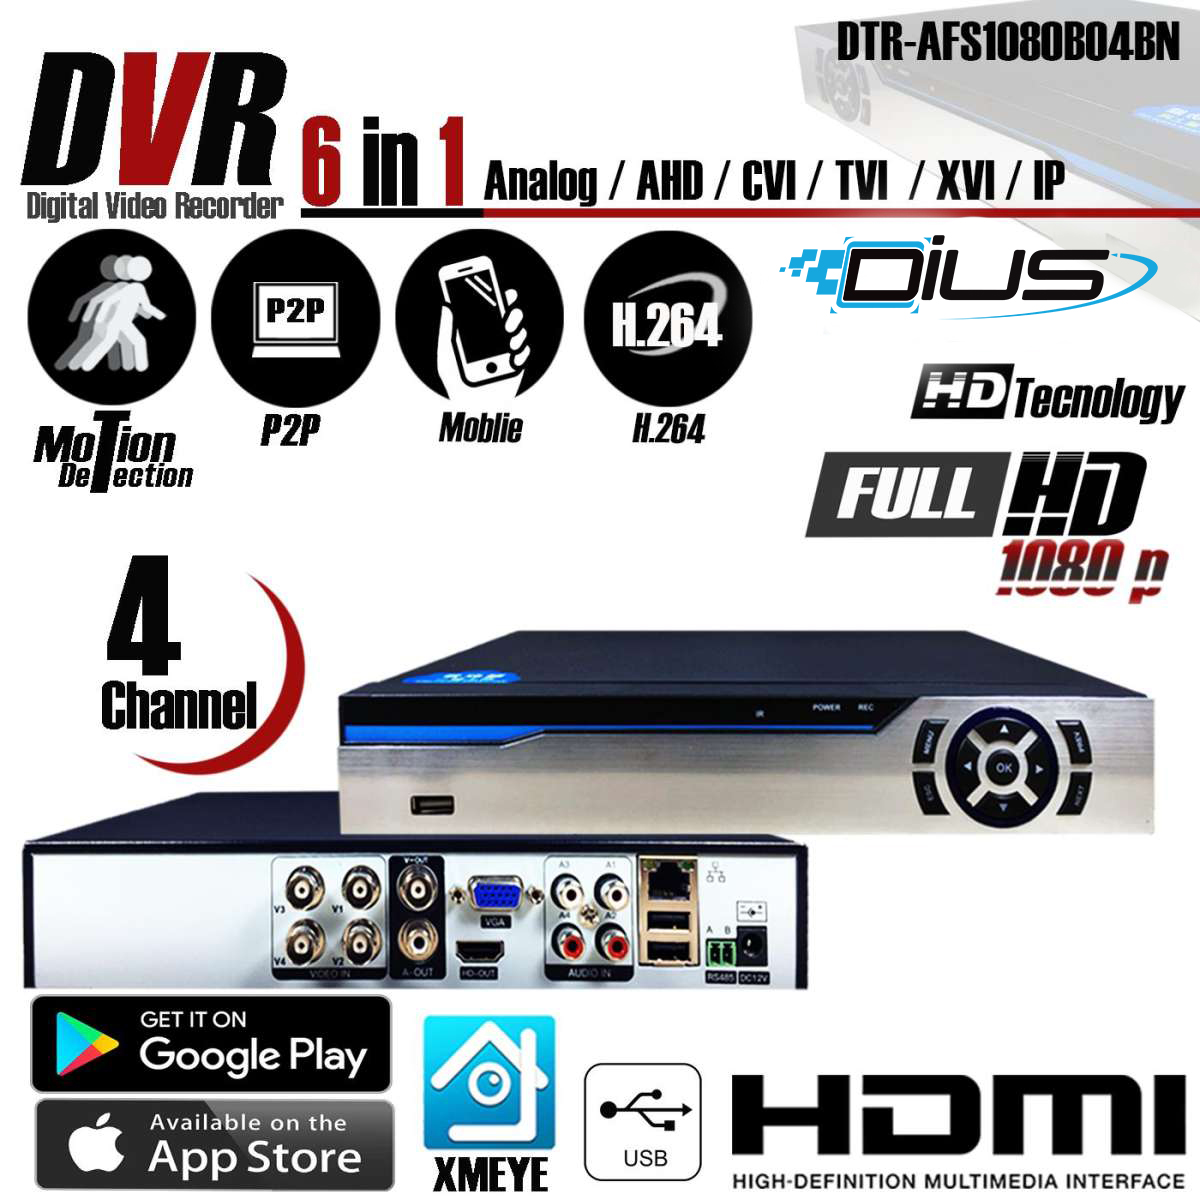 6 in 1 เครื่องบันทึกภาพ Dius ( DTR-AFS1080B04BN ) DVR Full HD 1080p 4 Channel สำหรับ กล้องวงจรปิดระบบ AHD / CVI / TVI / XVI / IP / Analog